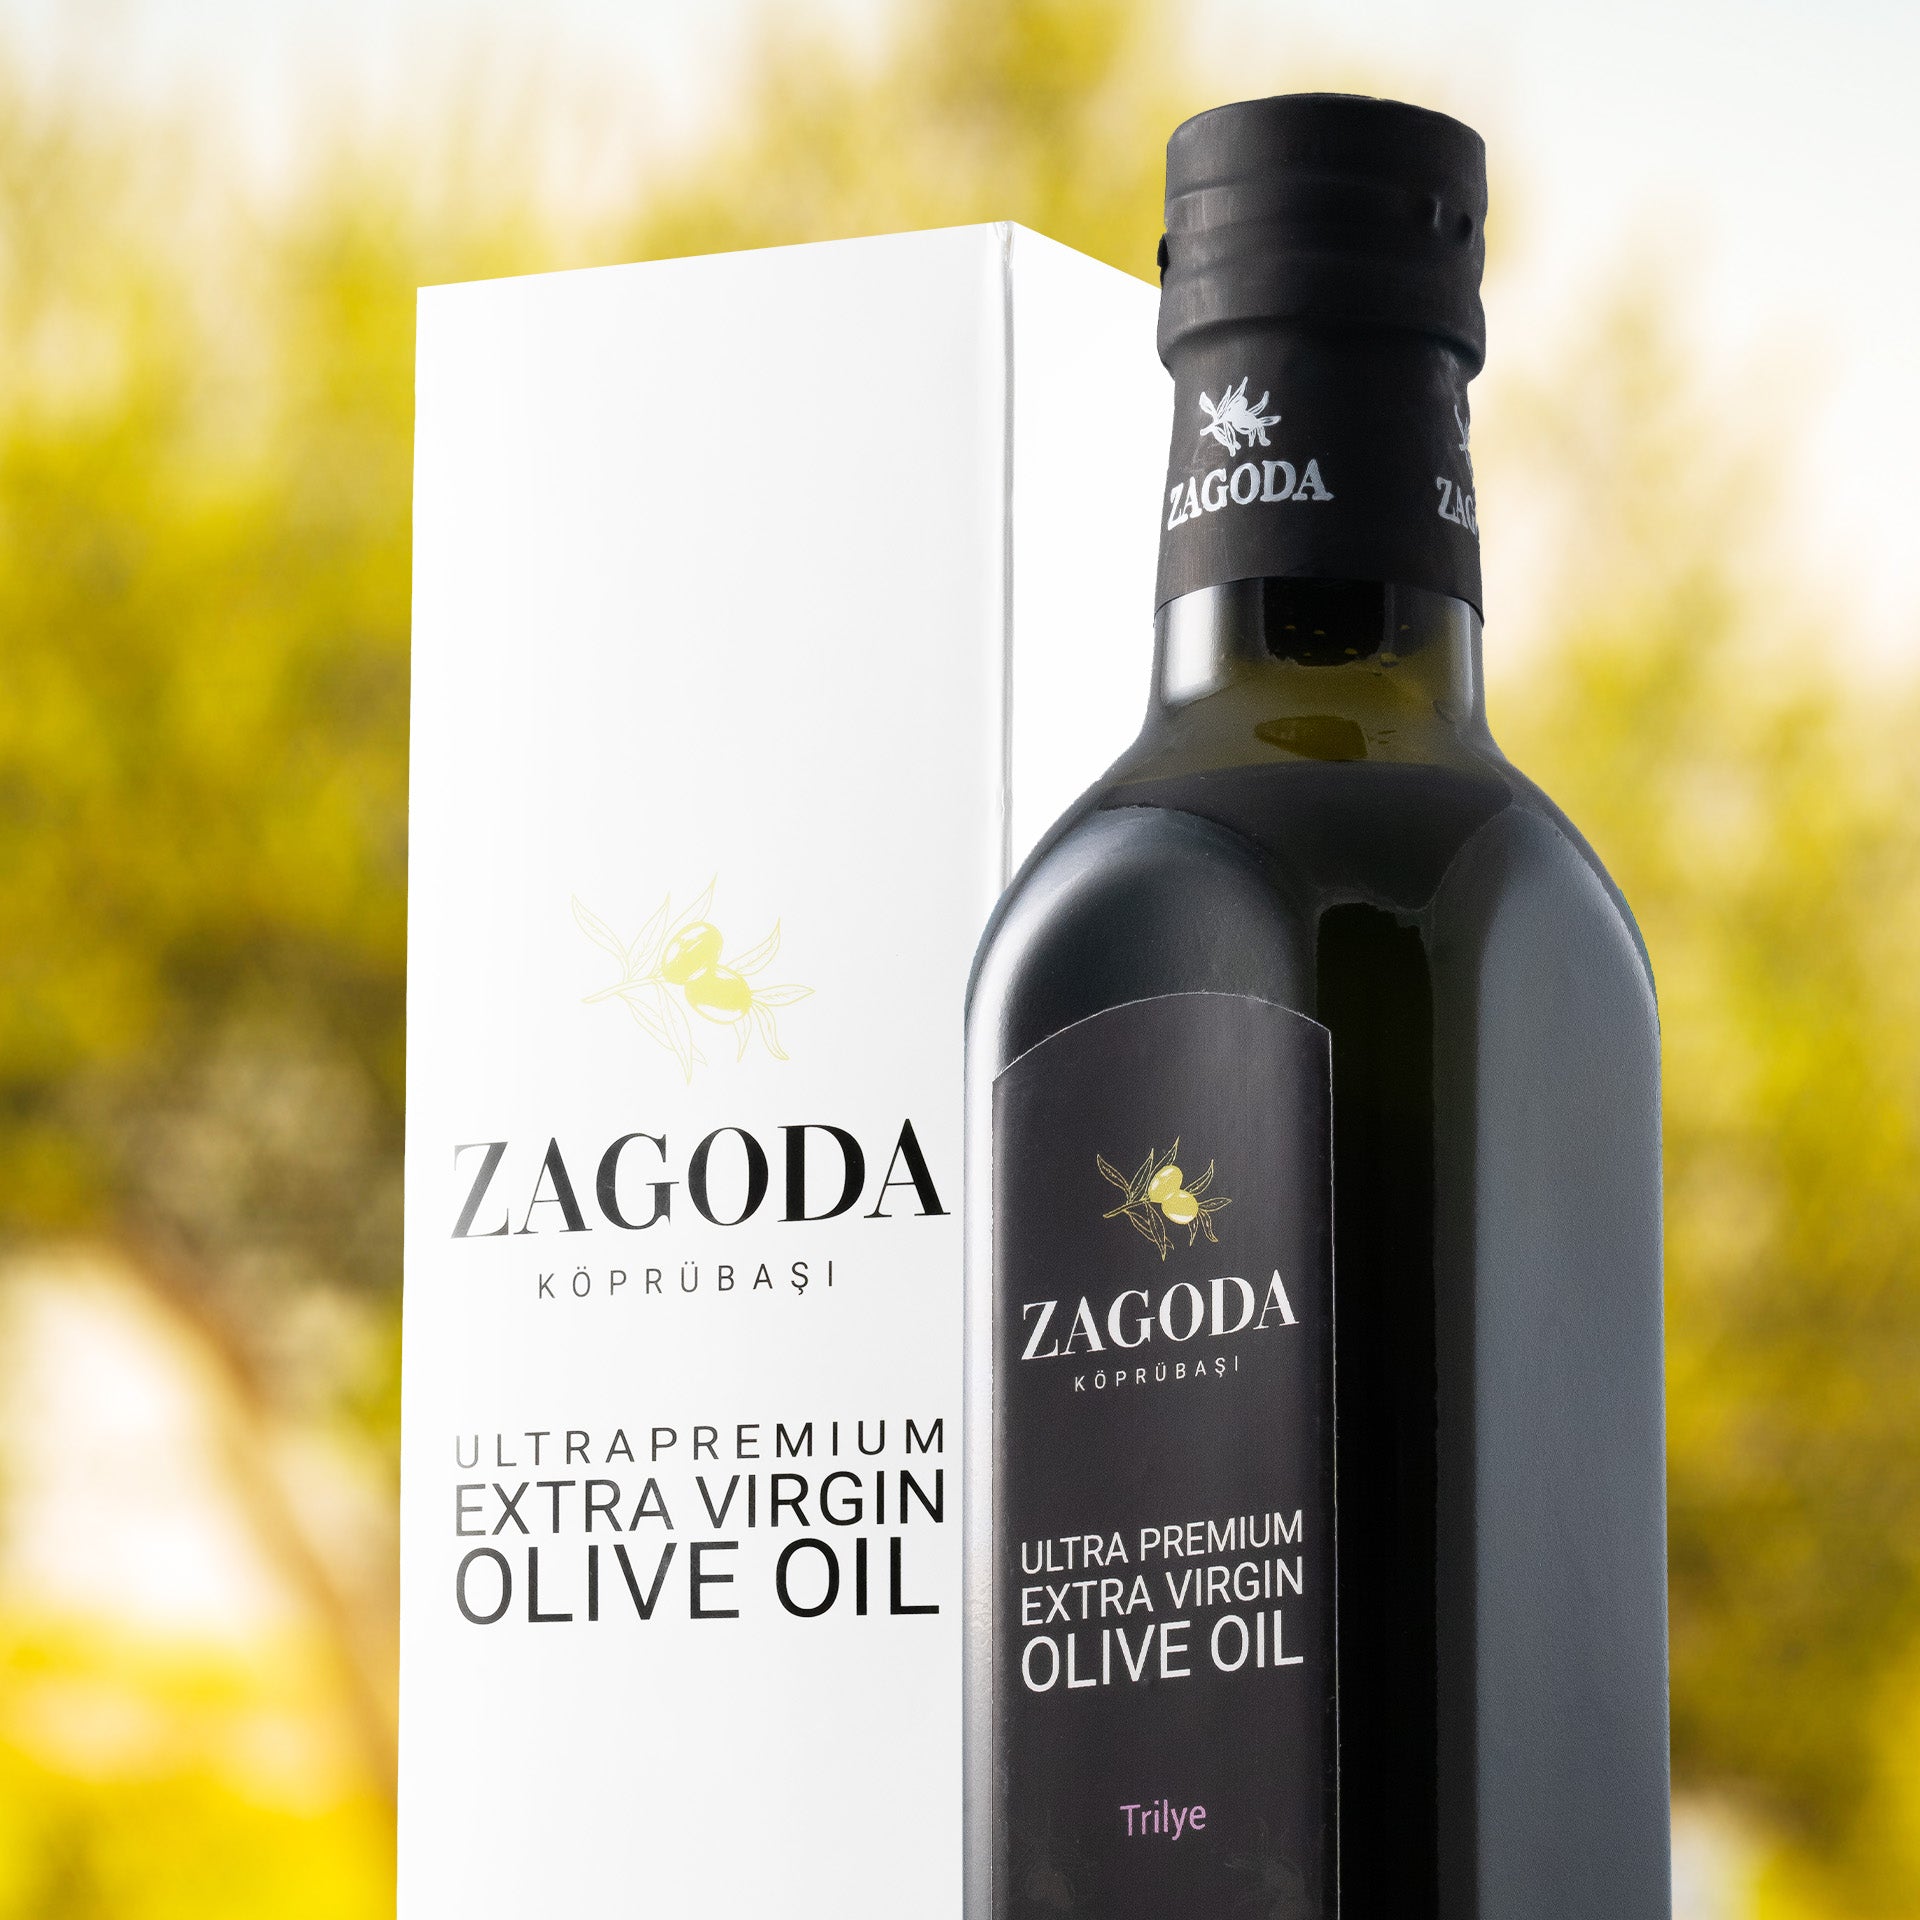 Trilye Extra Virgin Olive Oil